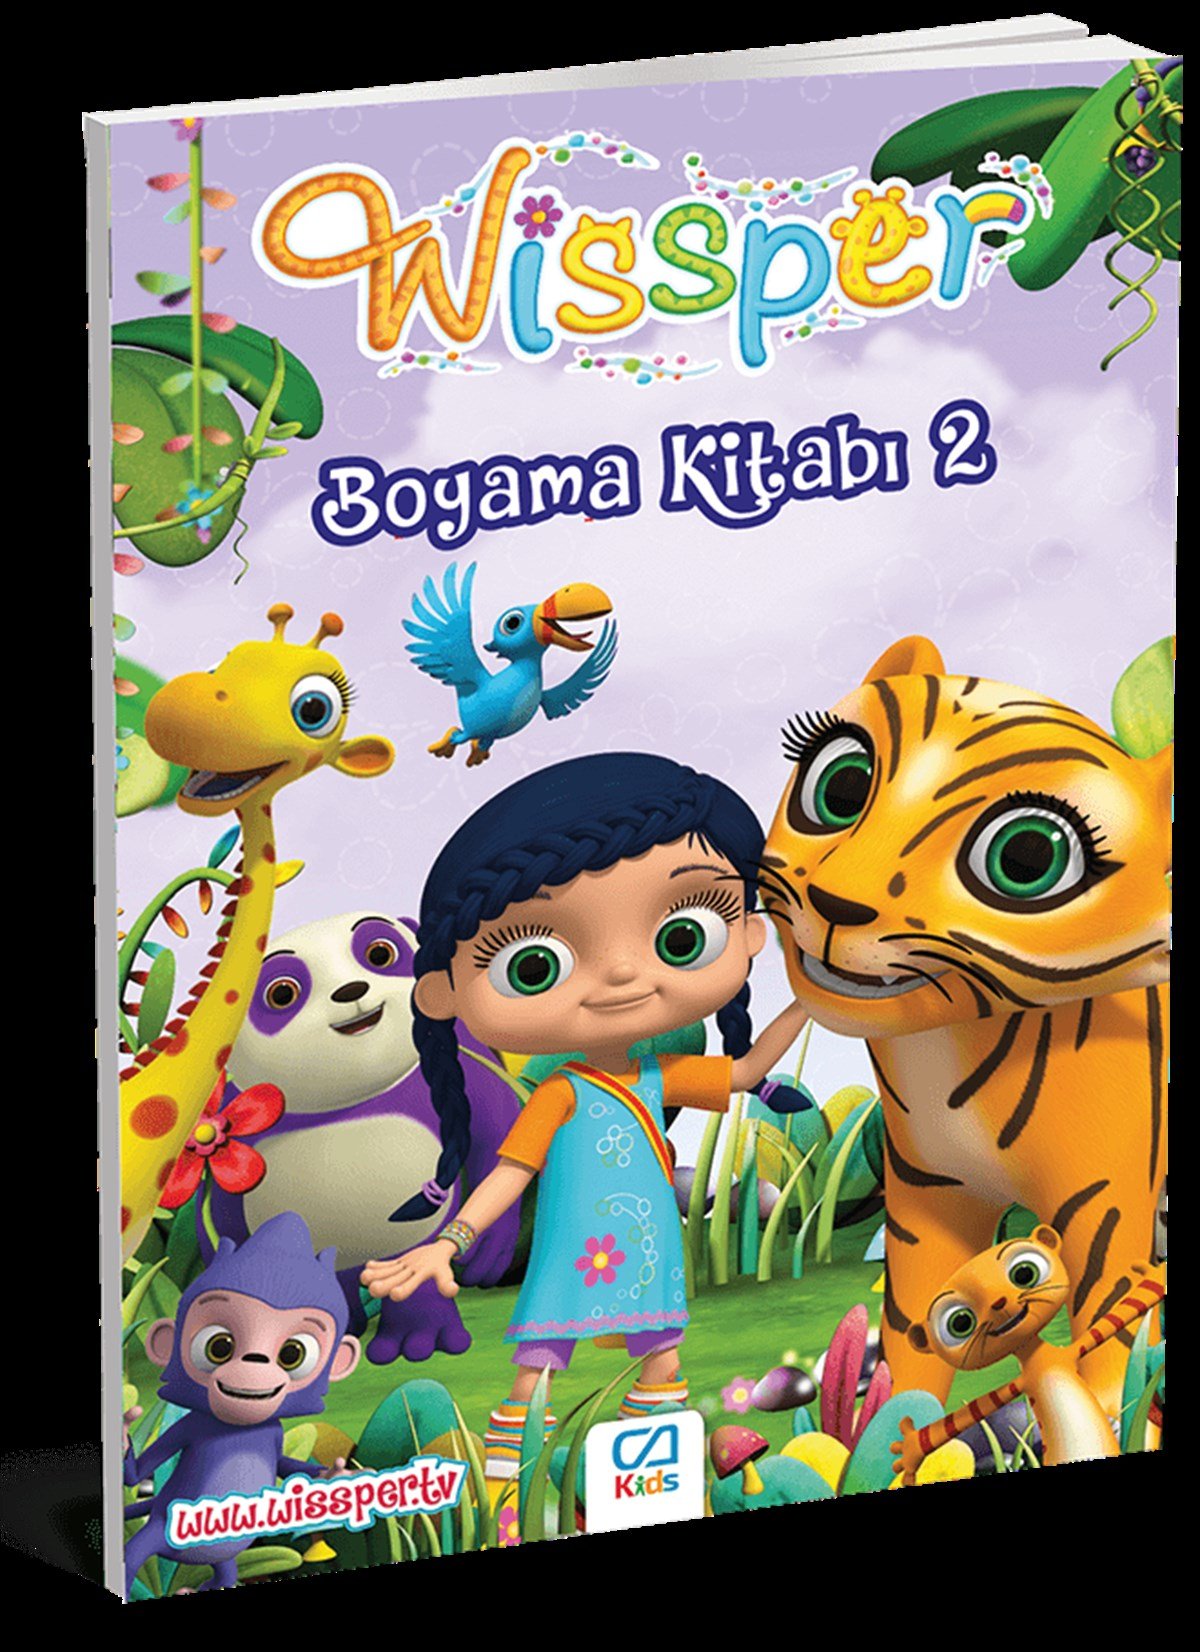 Wissper Boyama Kitabı 24 Sayfa | www.kreşmarket.com